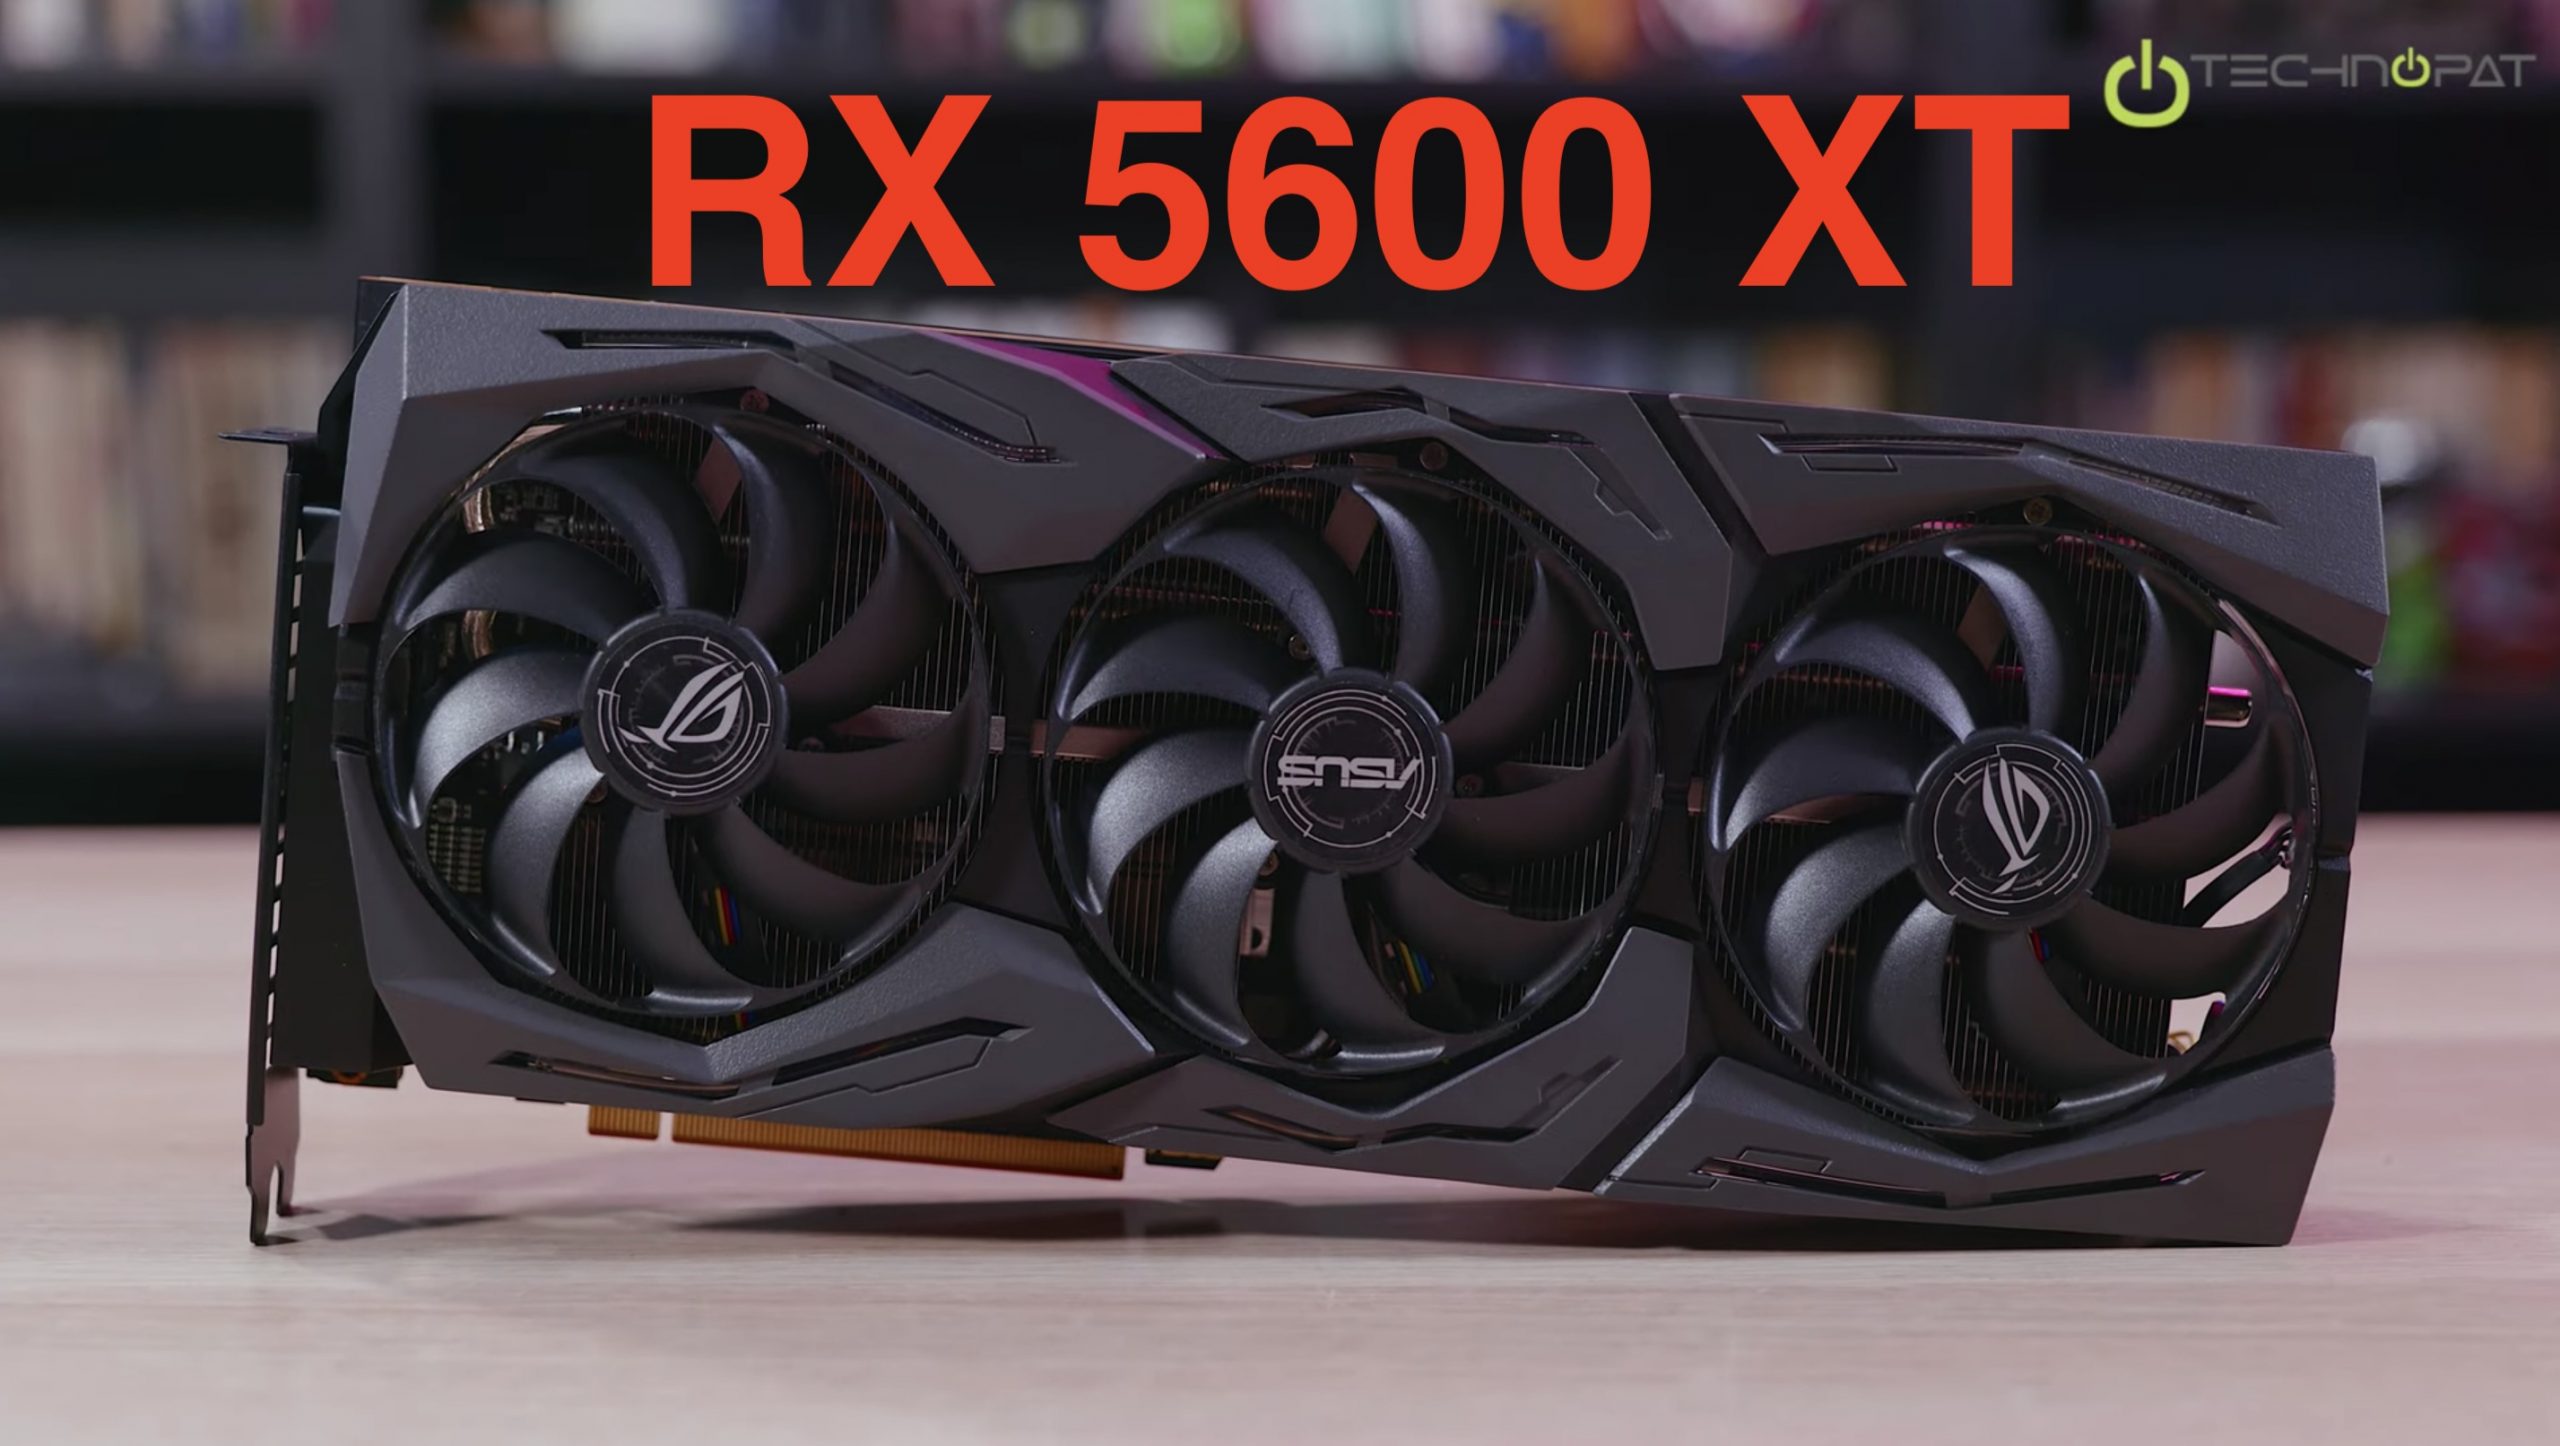 ASUS ROG Strix Gaming Radeon RX 5600 XT İncelemesi - Technopat